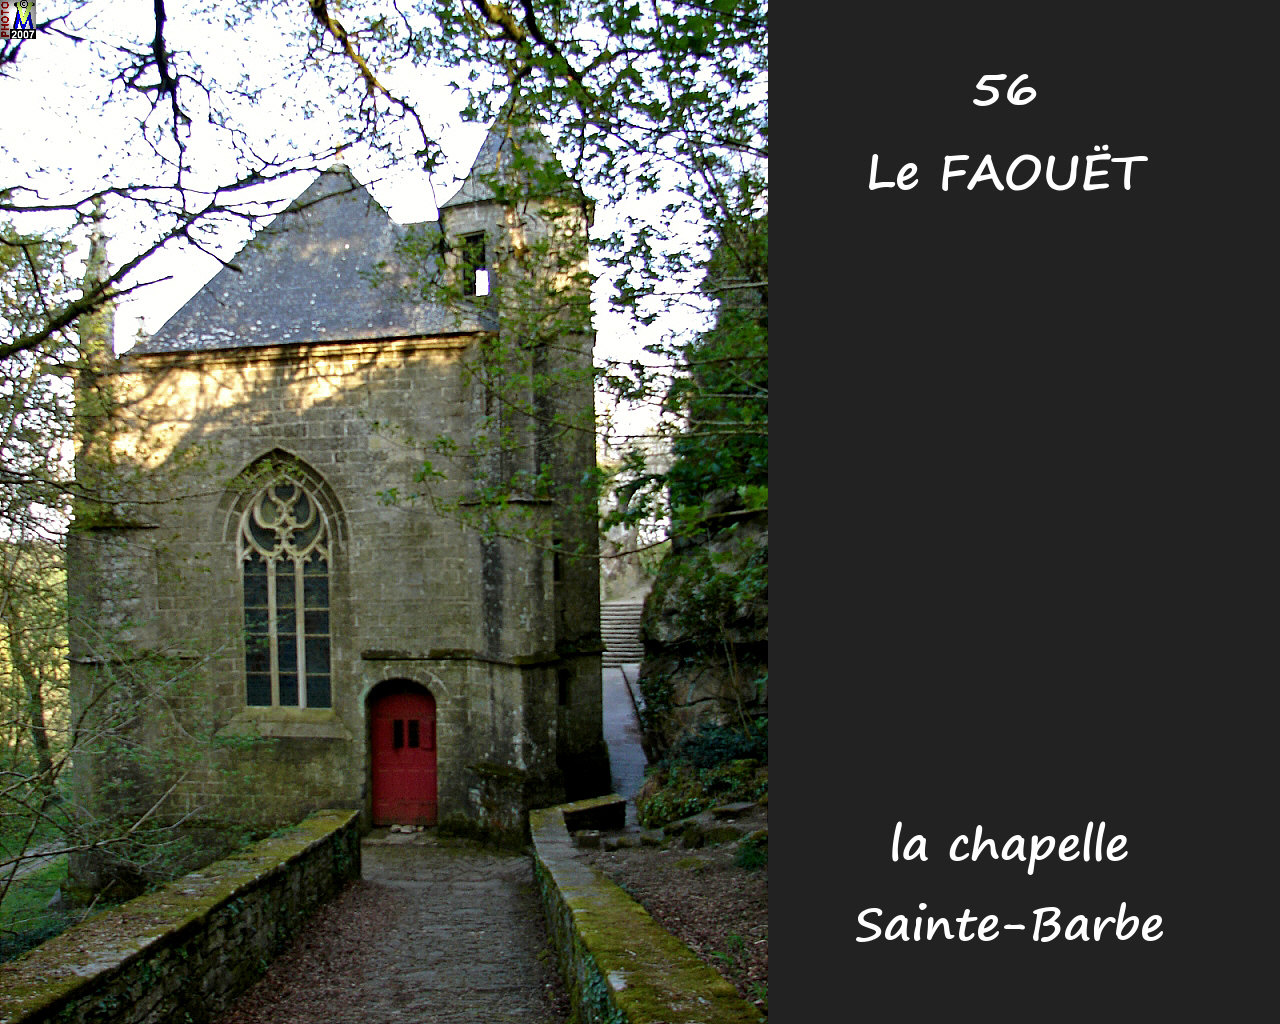 56FAOUET_chapelle-barbe_104.jpg